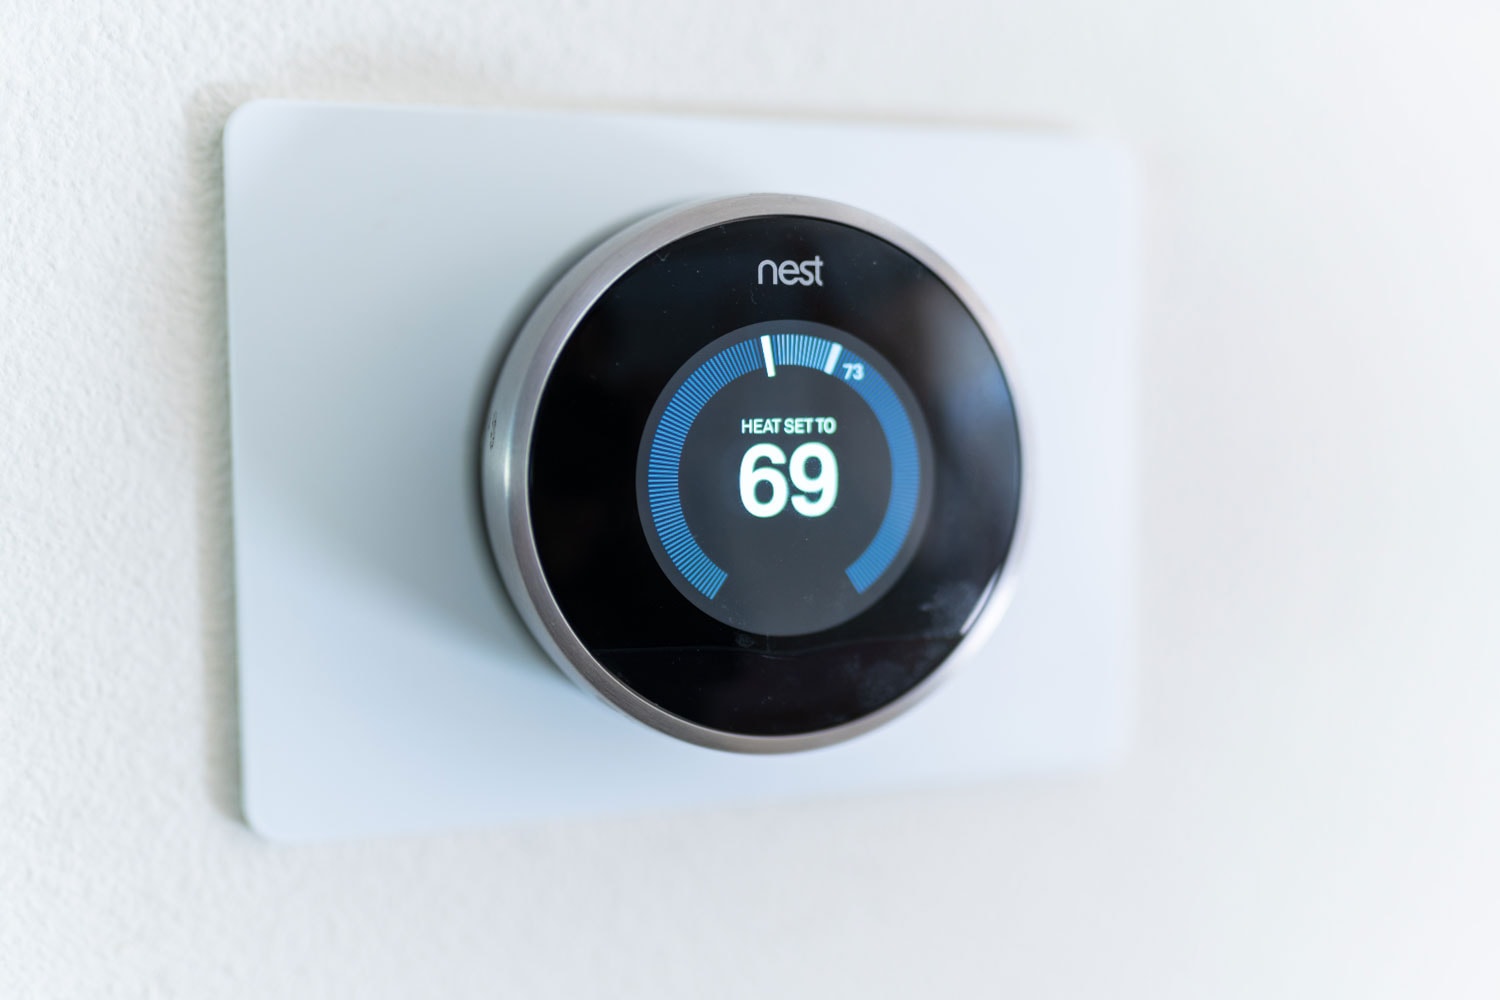 A Nest thermostat set at 69 degrees Fahrenheit